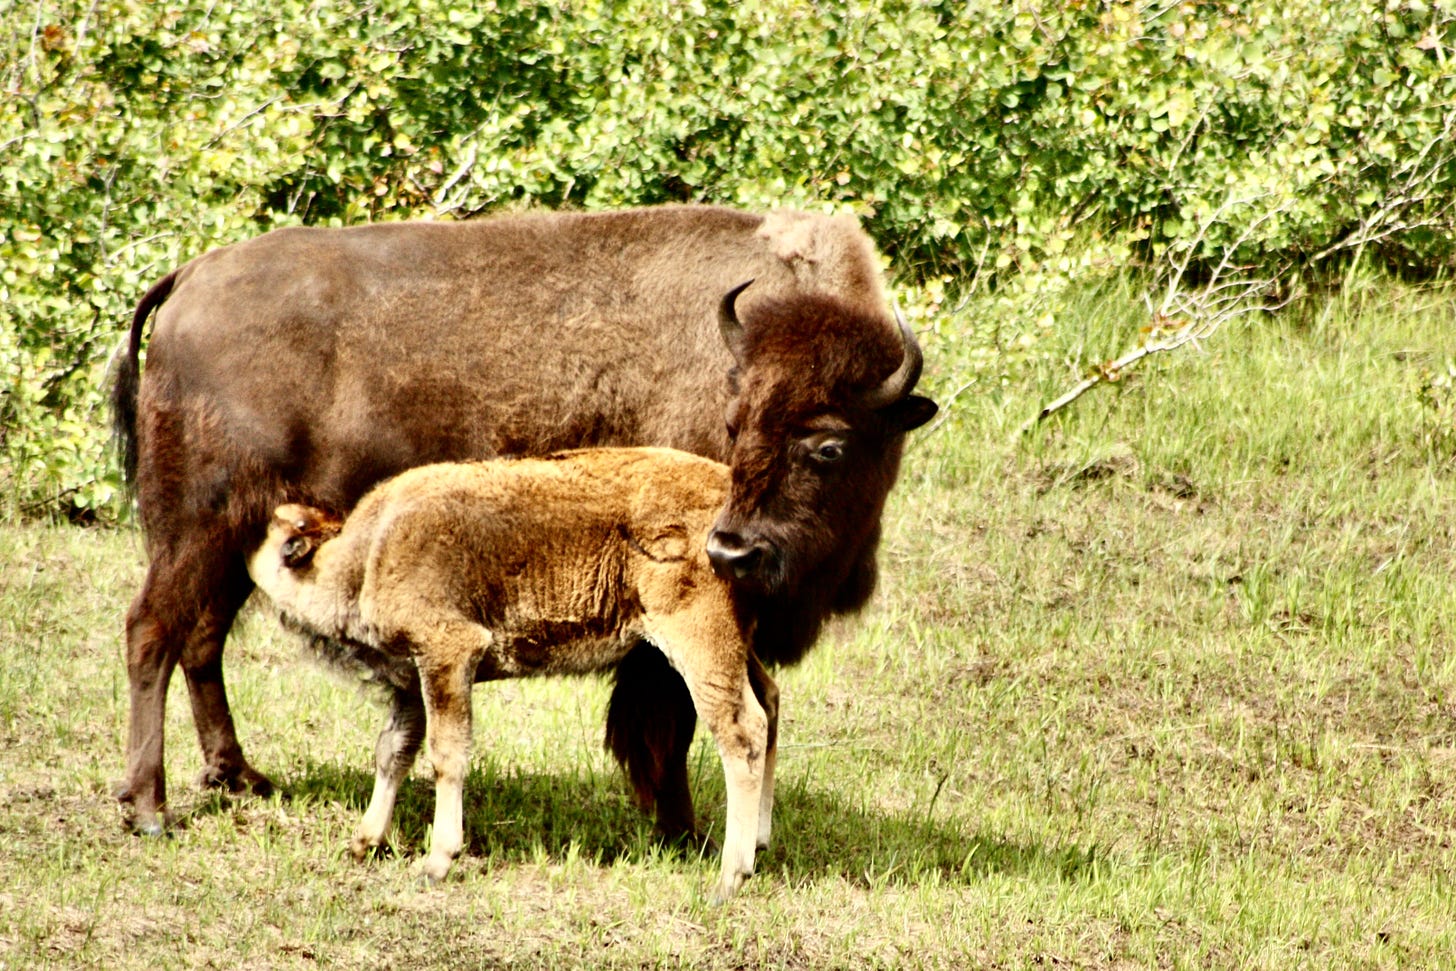 Bison mother and calf nursing.